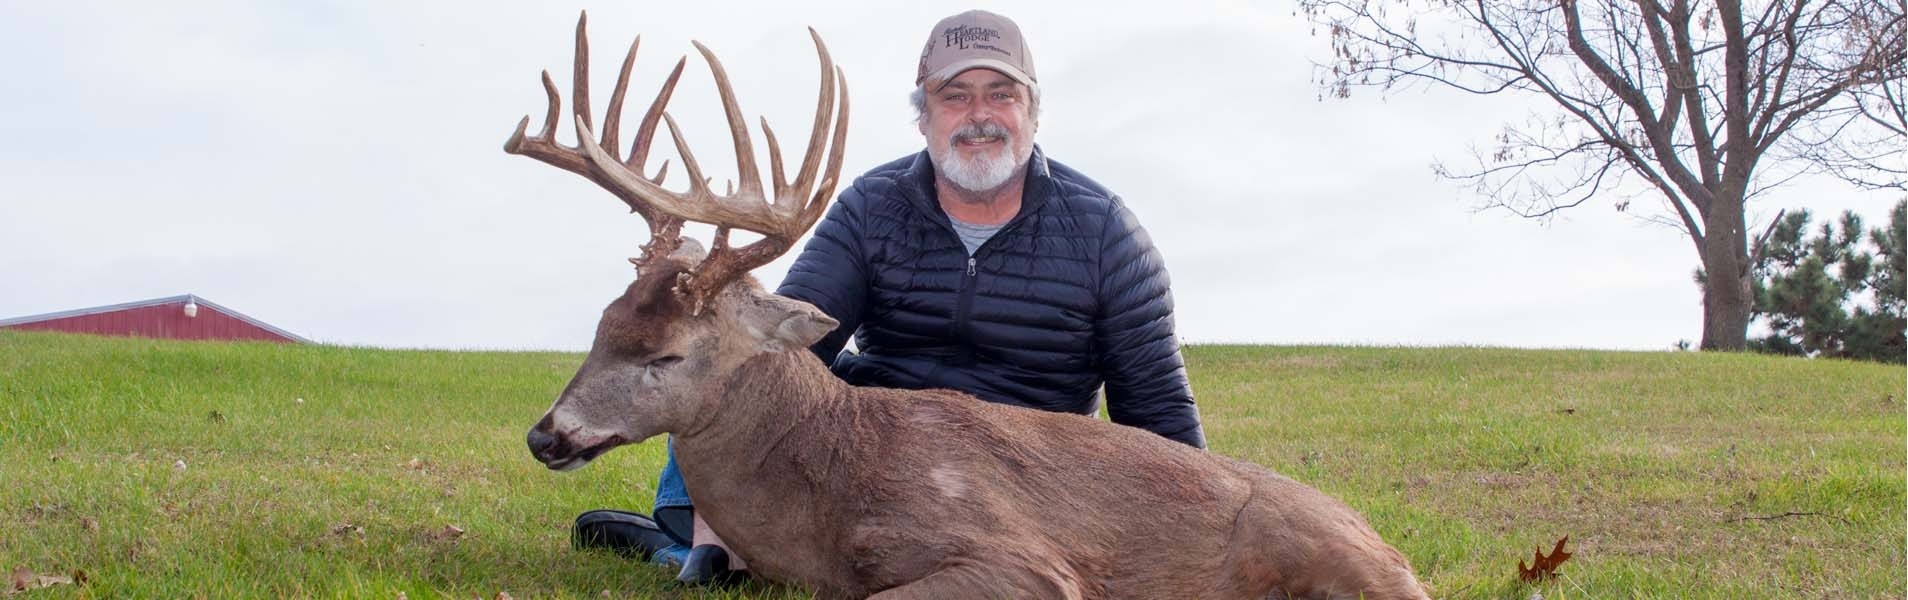 Hunting The Illinois Whitetail Rut | Heartland Lodge  Central Illinois Peak Rut 2021